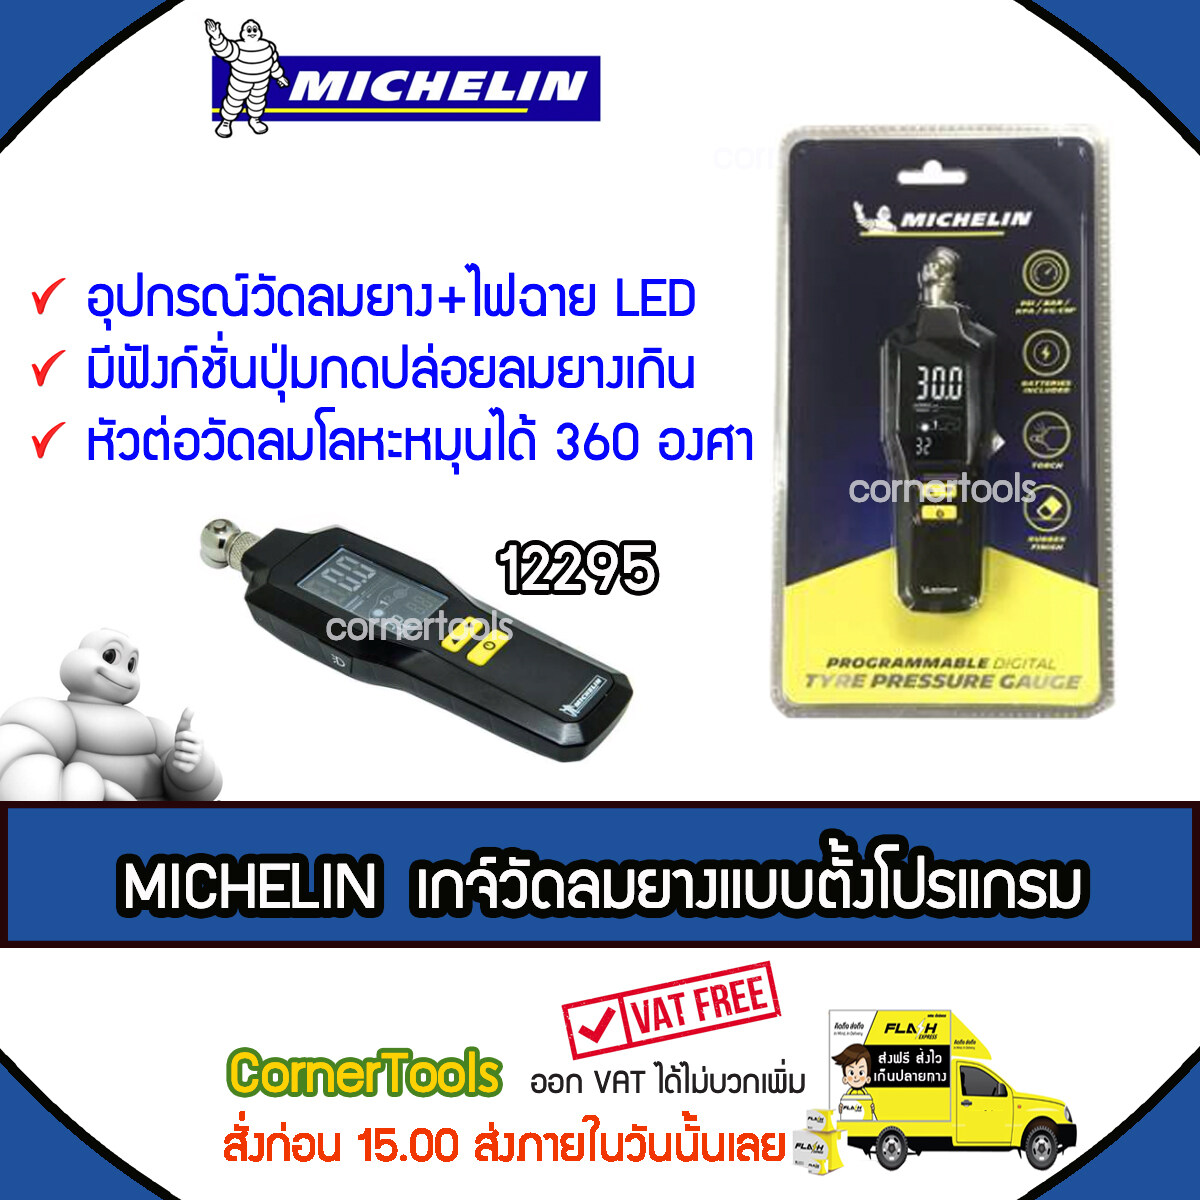 Michelin เกจ์วัดลมยางแบบตั้งโปรแกรม รุ่น 12295 Programmable Digital Tyre Pressure Gauge ***ส่งฟรีแฟลช สั่งก่อนบ่ายสามส่งภายในวัน***